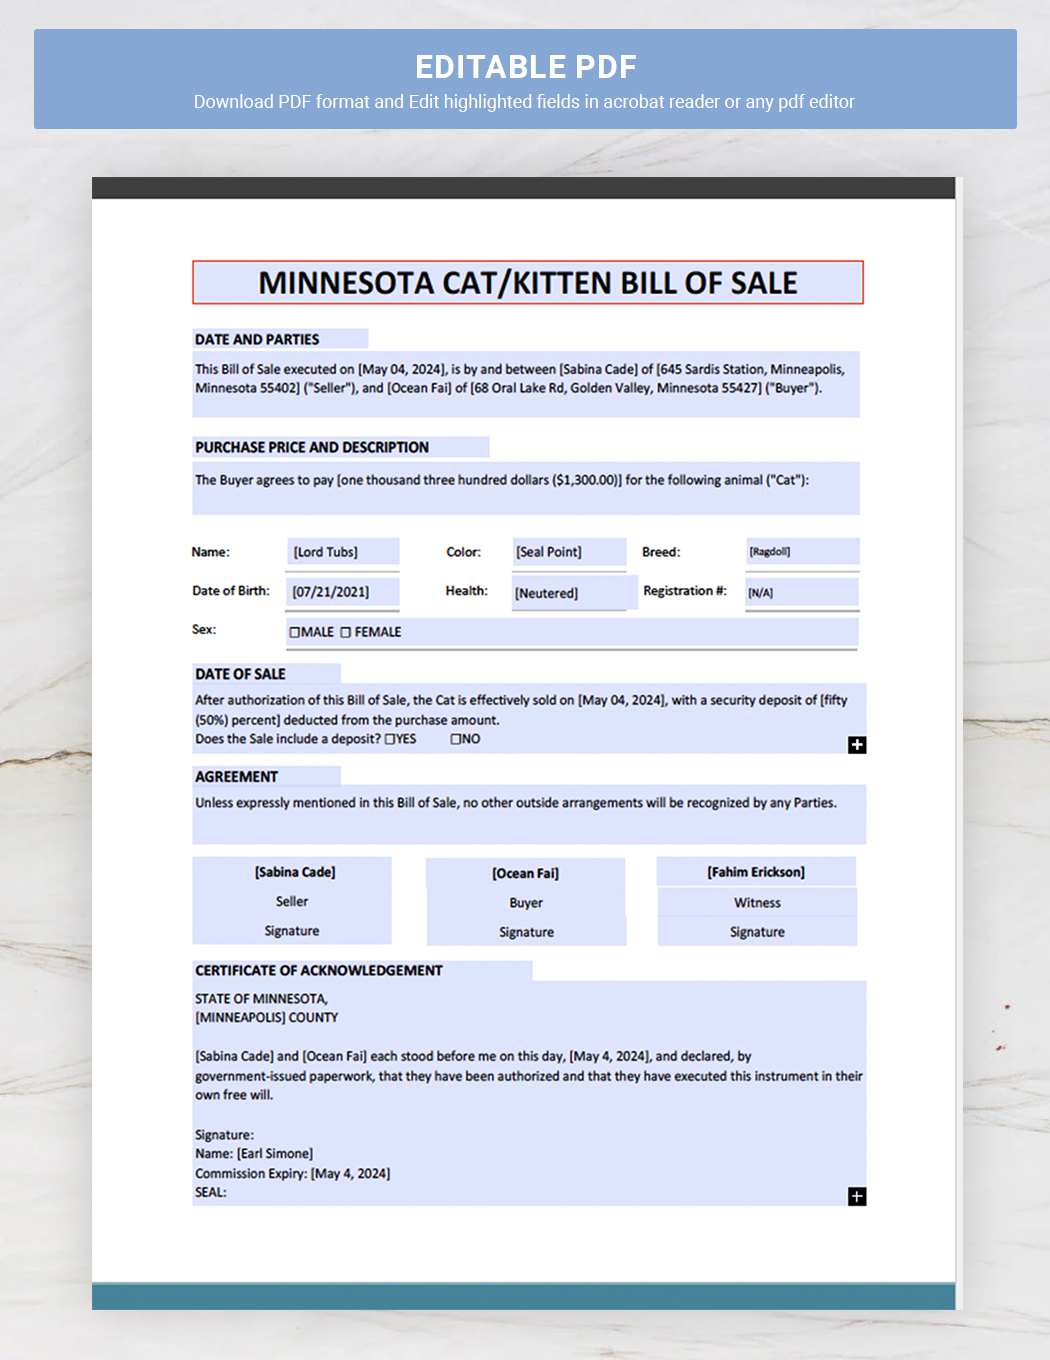 Minnesota Cat / Kitten Bill of Sale Template